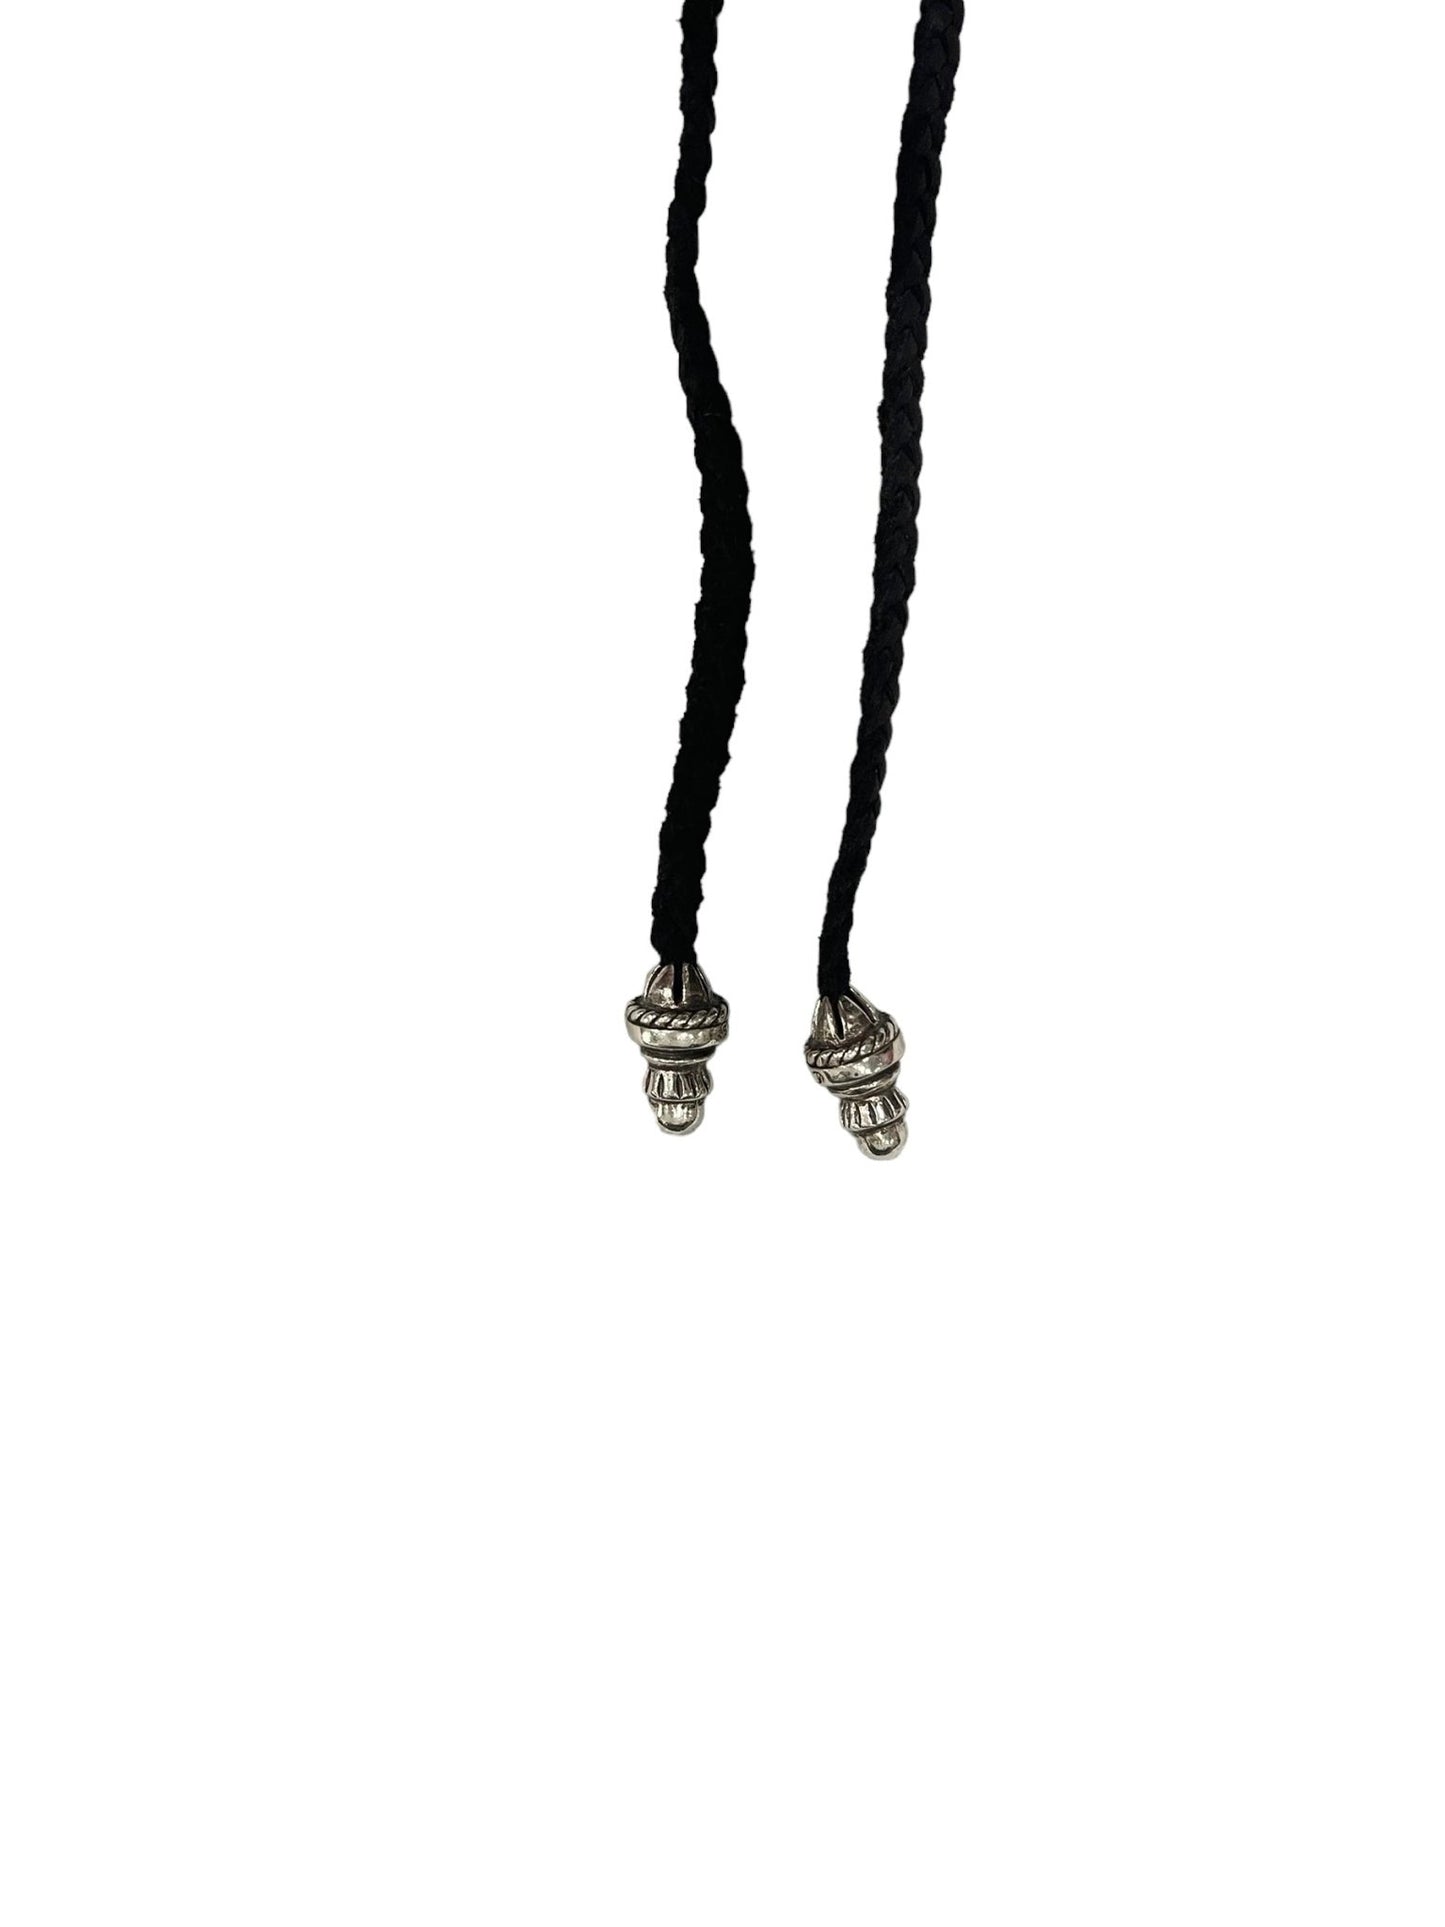 Chrome Hearts Silver Cross Pendant w/ Black Rope Chain - Supra Sneakers